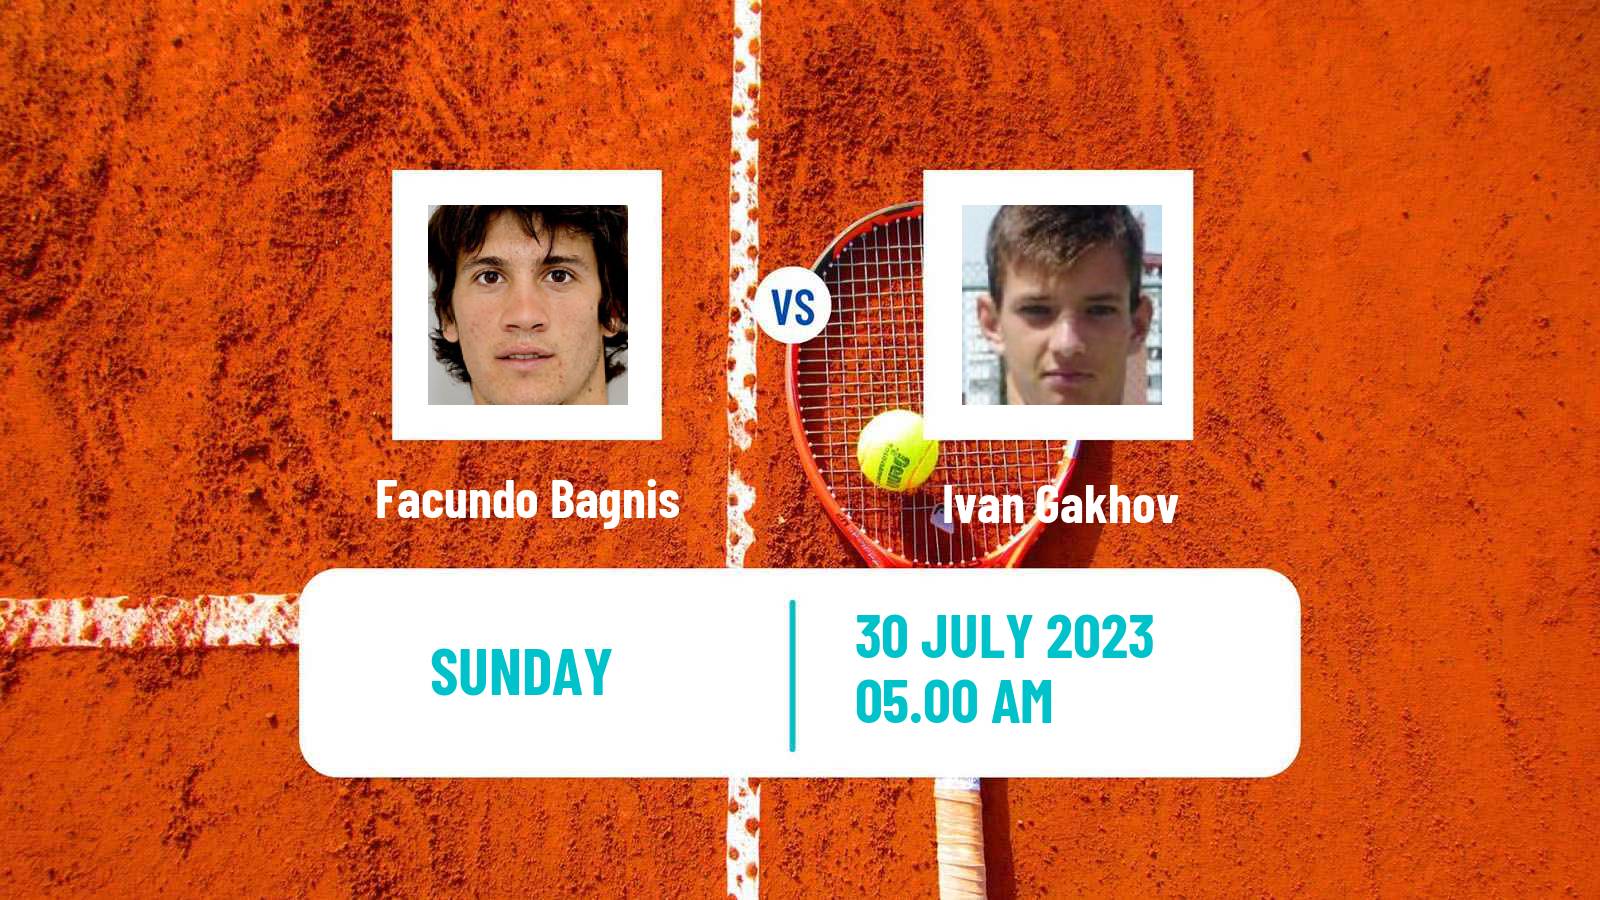 Tennis ATP Kitzbuhel Facundo Bagnis - Ivan Gakhov